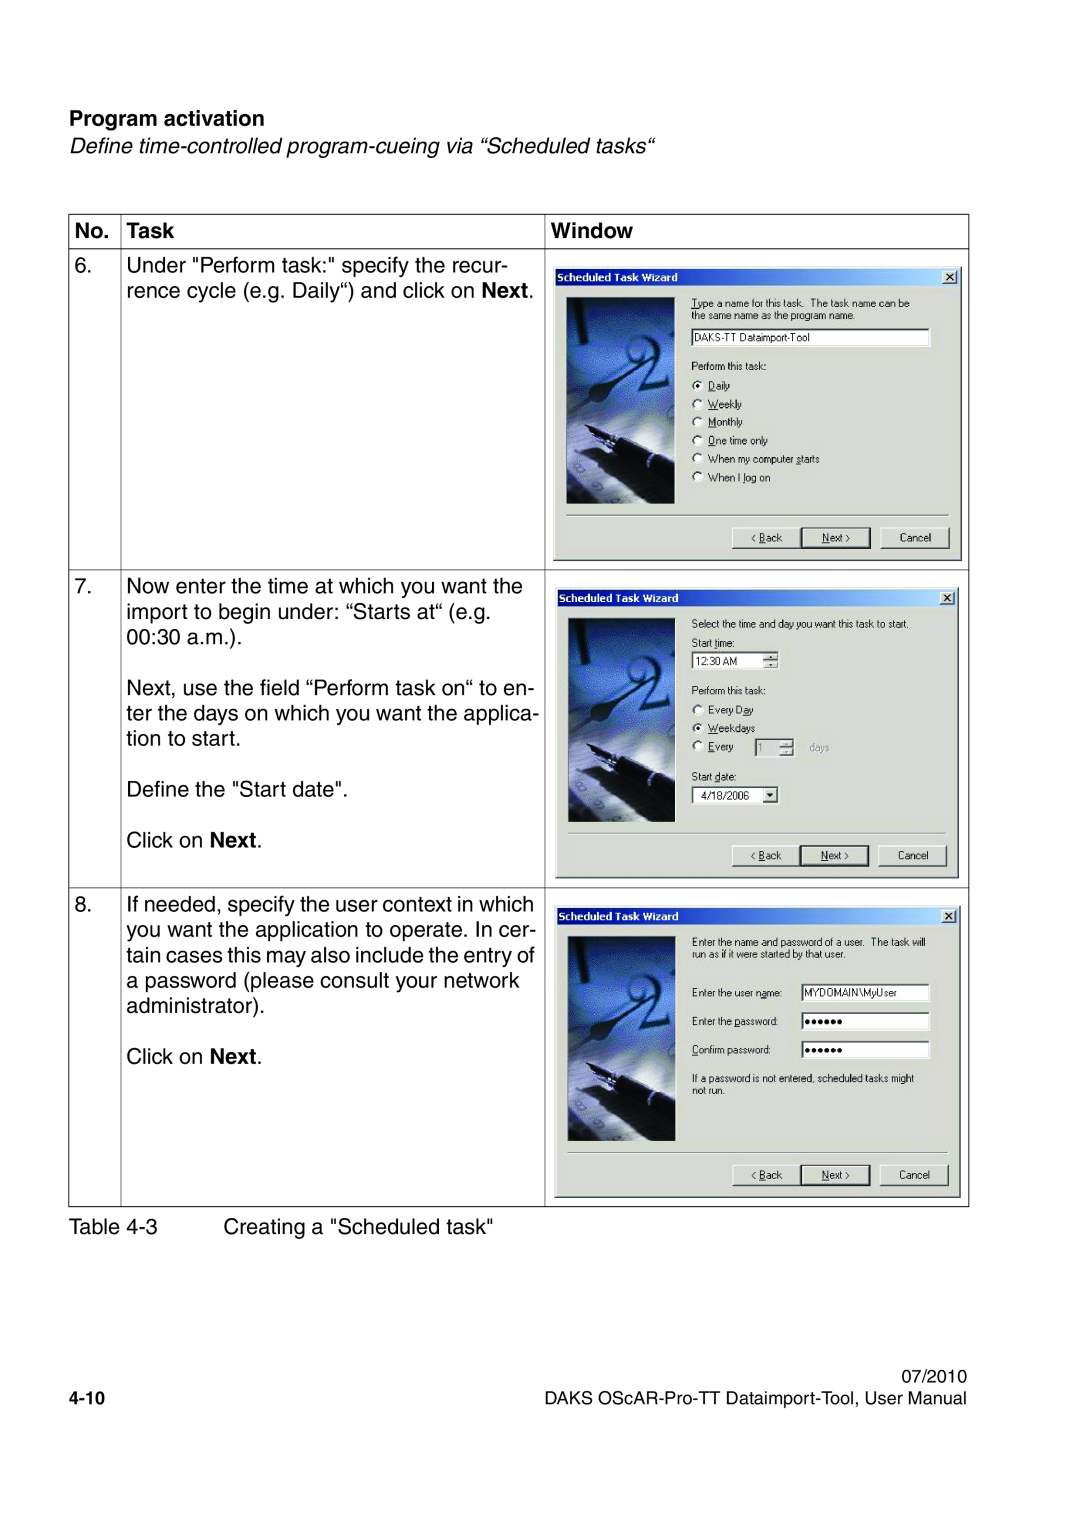 Siemens A31003-S1730-U102-1-7619 user manual Program activation, Task, Window, Under Perform task specify the recur 